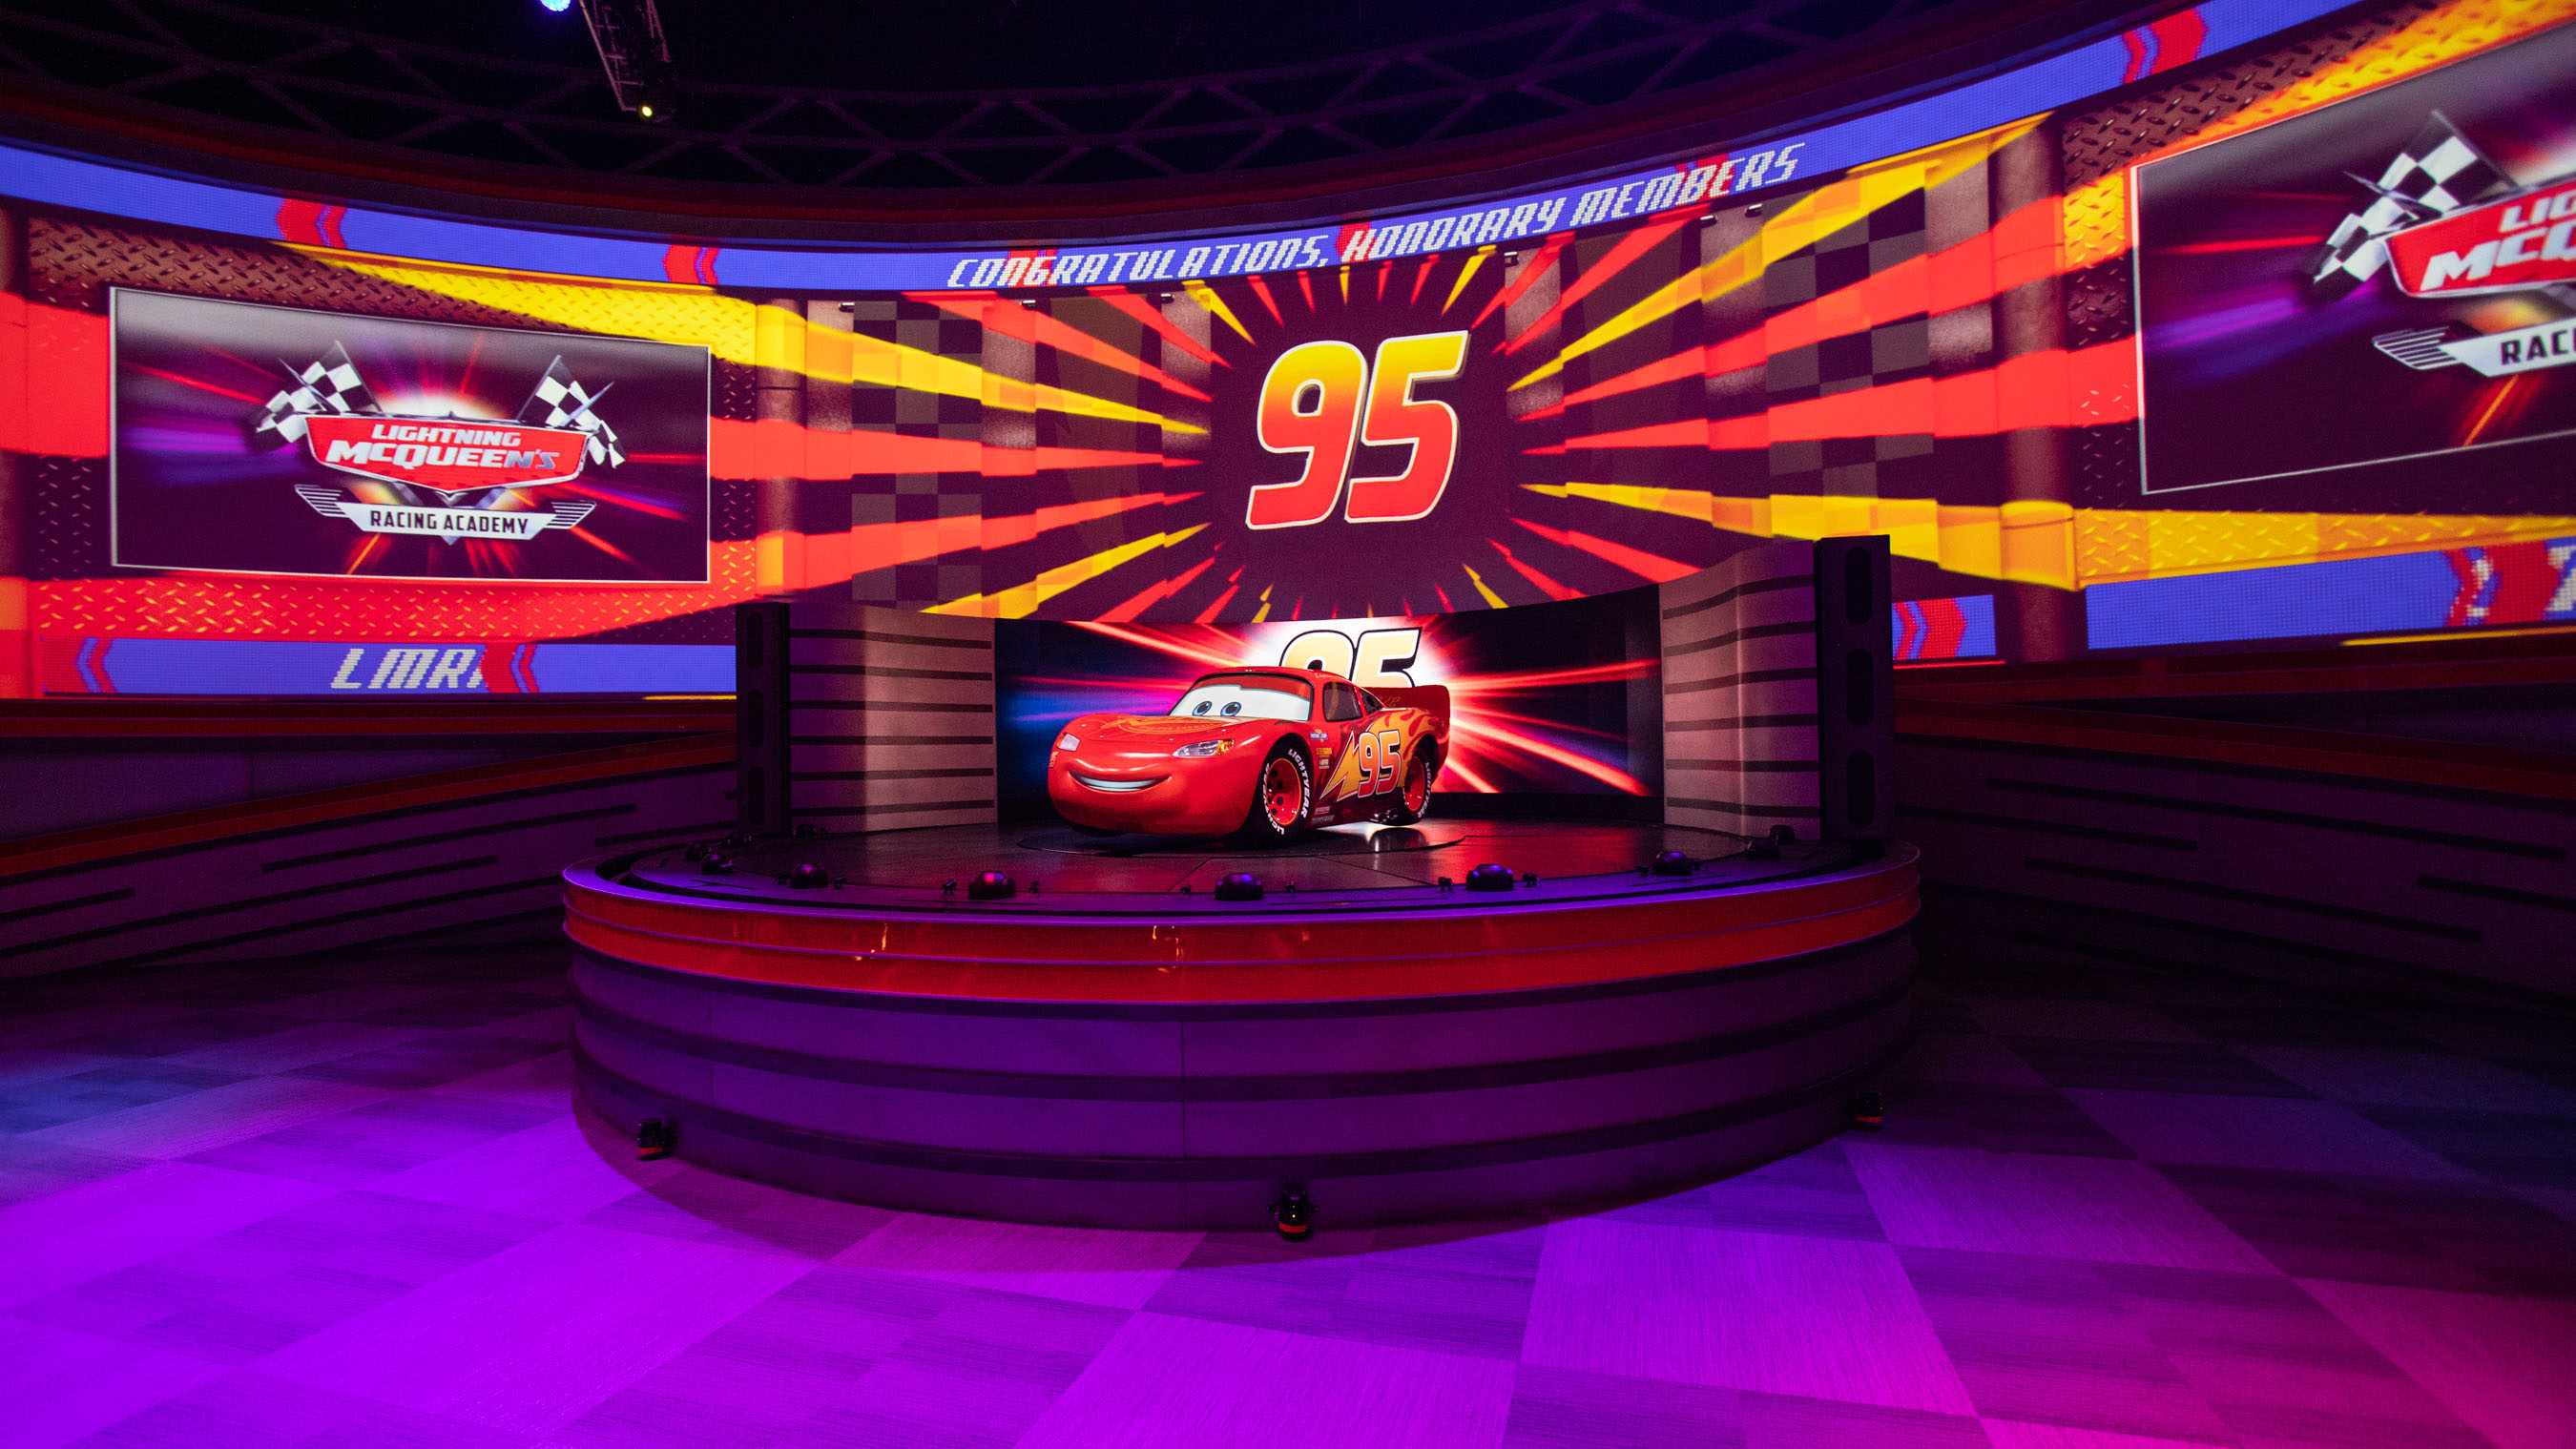 Lightning McQueen`s Racing Academy Logo at Hollywood Studios 31 Editorial  Stock Image - Image of magic, donald: 214639234